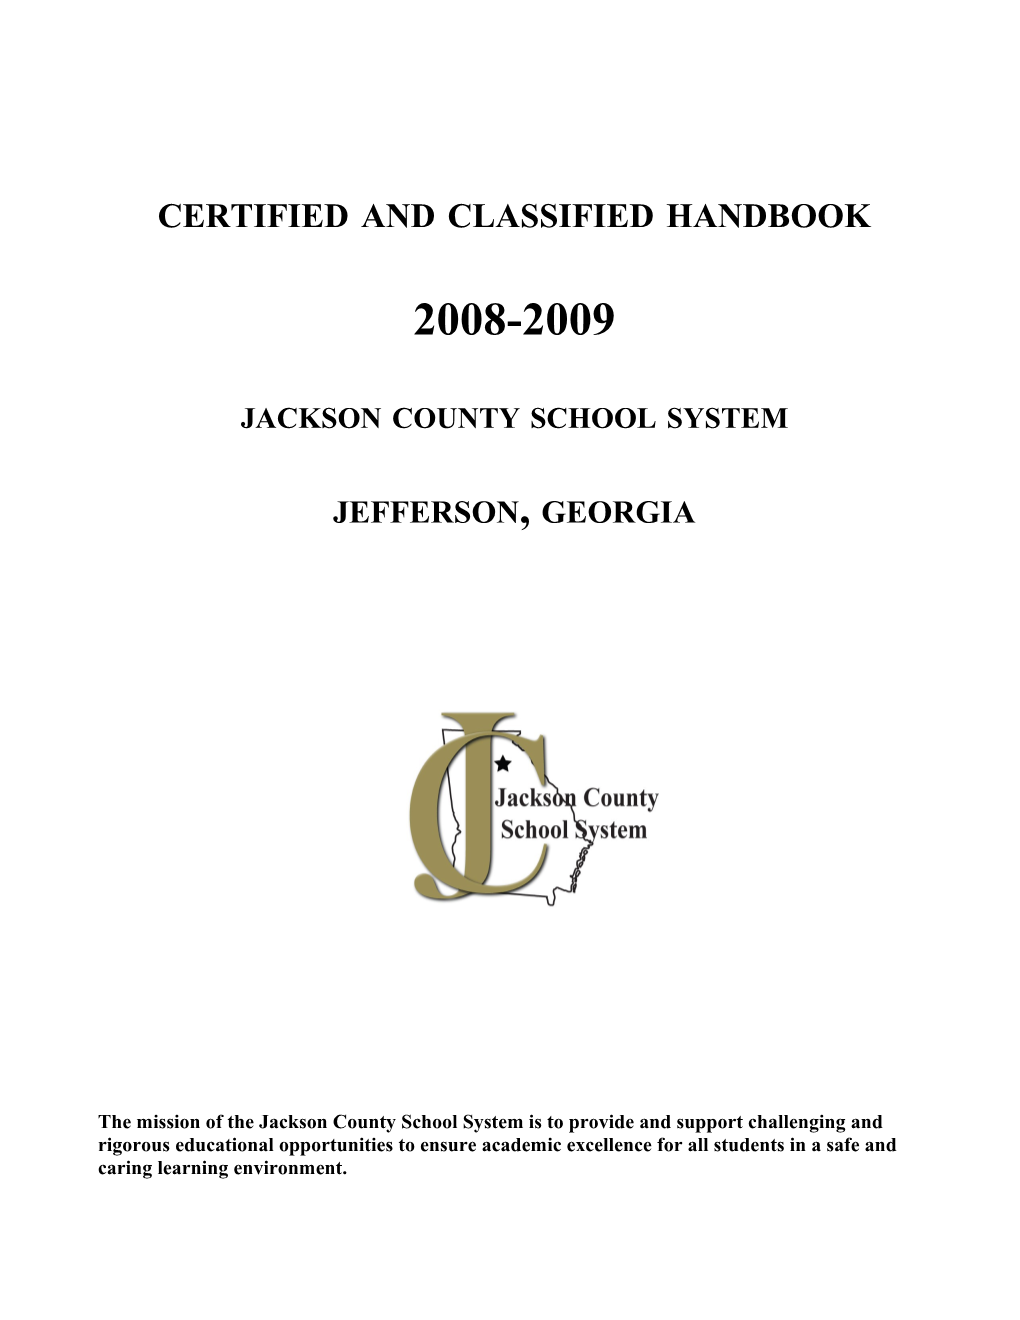 Certified and Classified Handbook